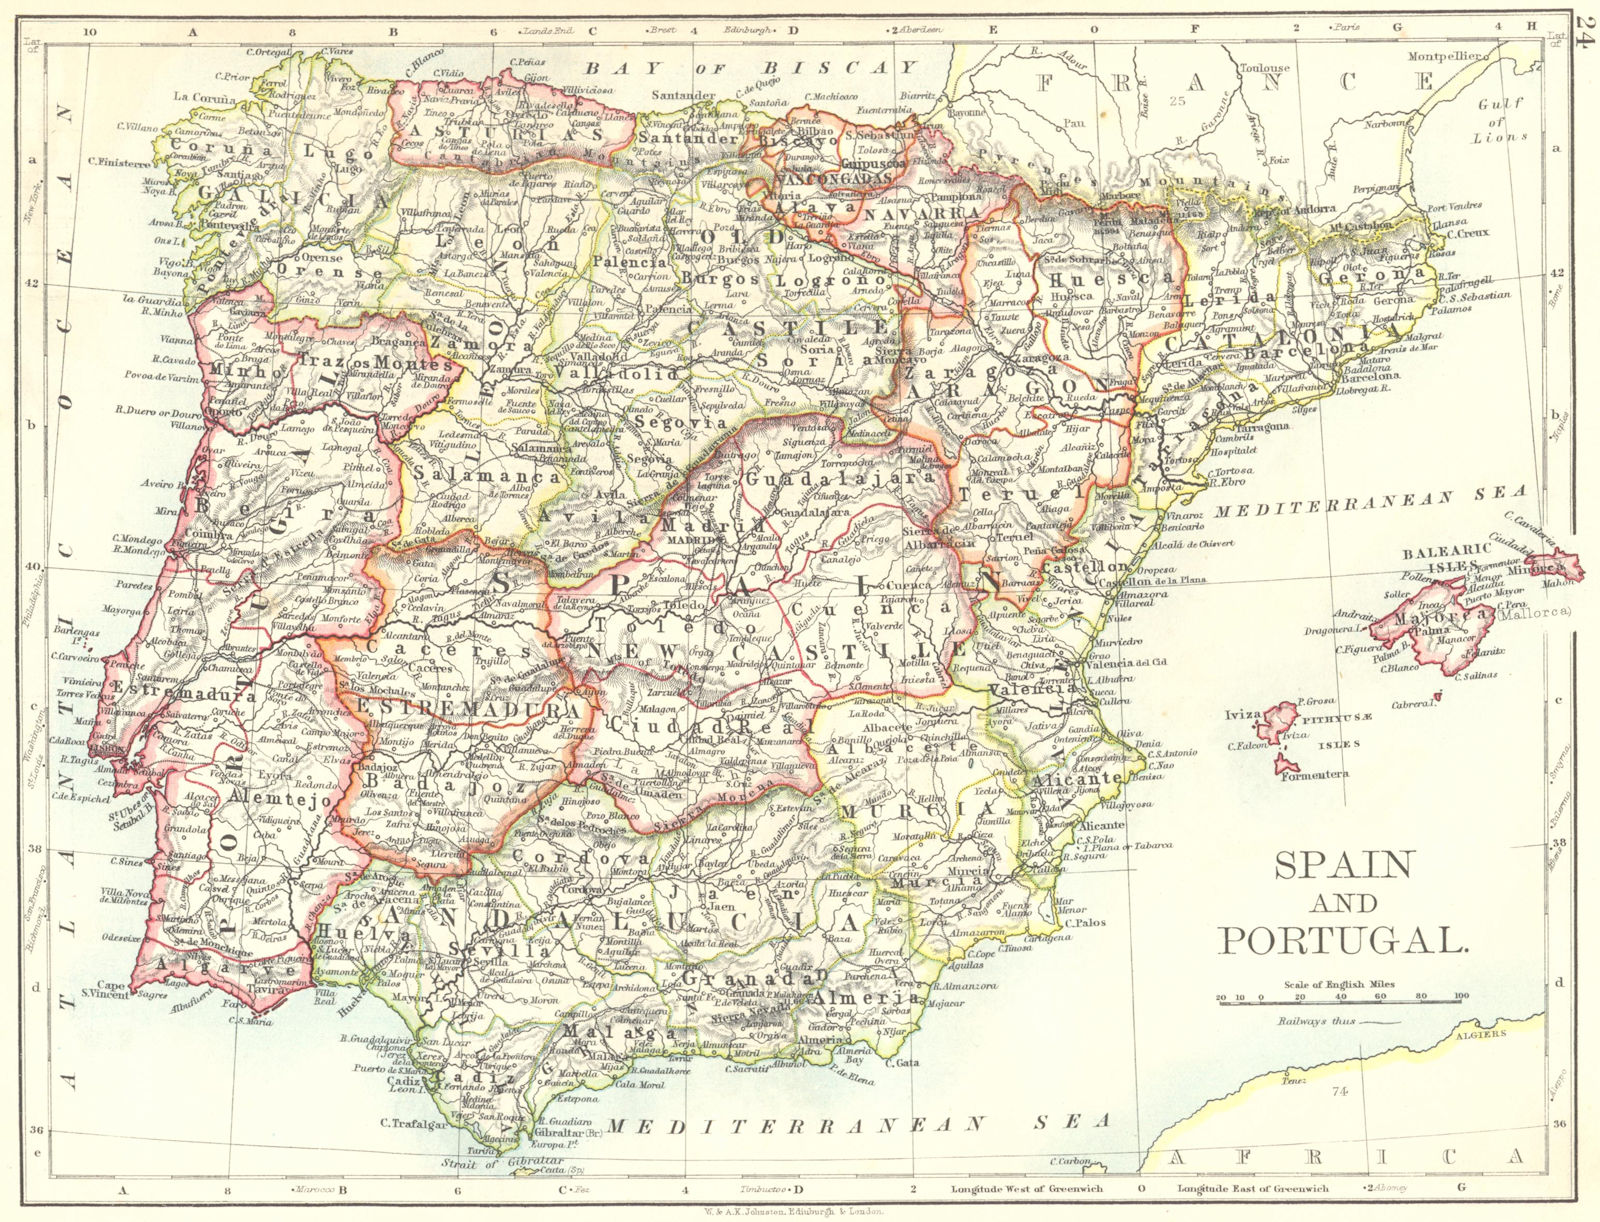 SPAIN AND PORTUGAL. Iberia. Provinces railways. Balearics. JOHNSTON 1899 map